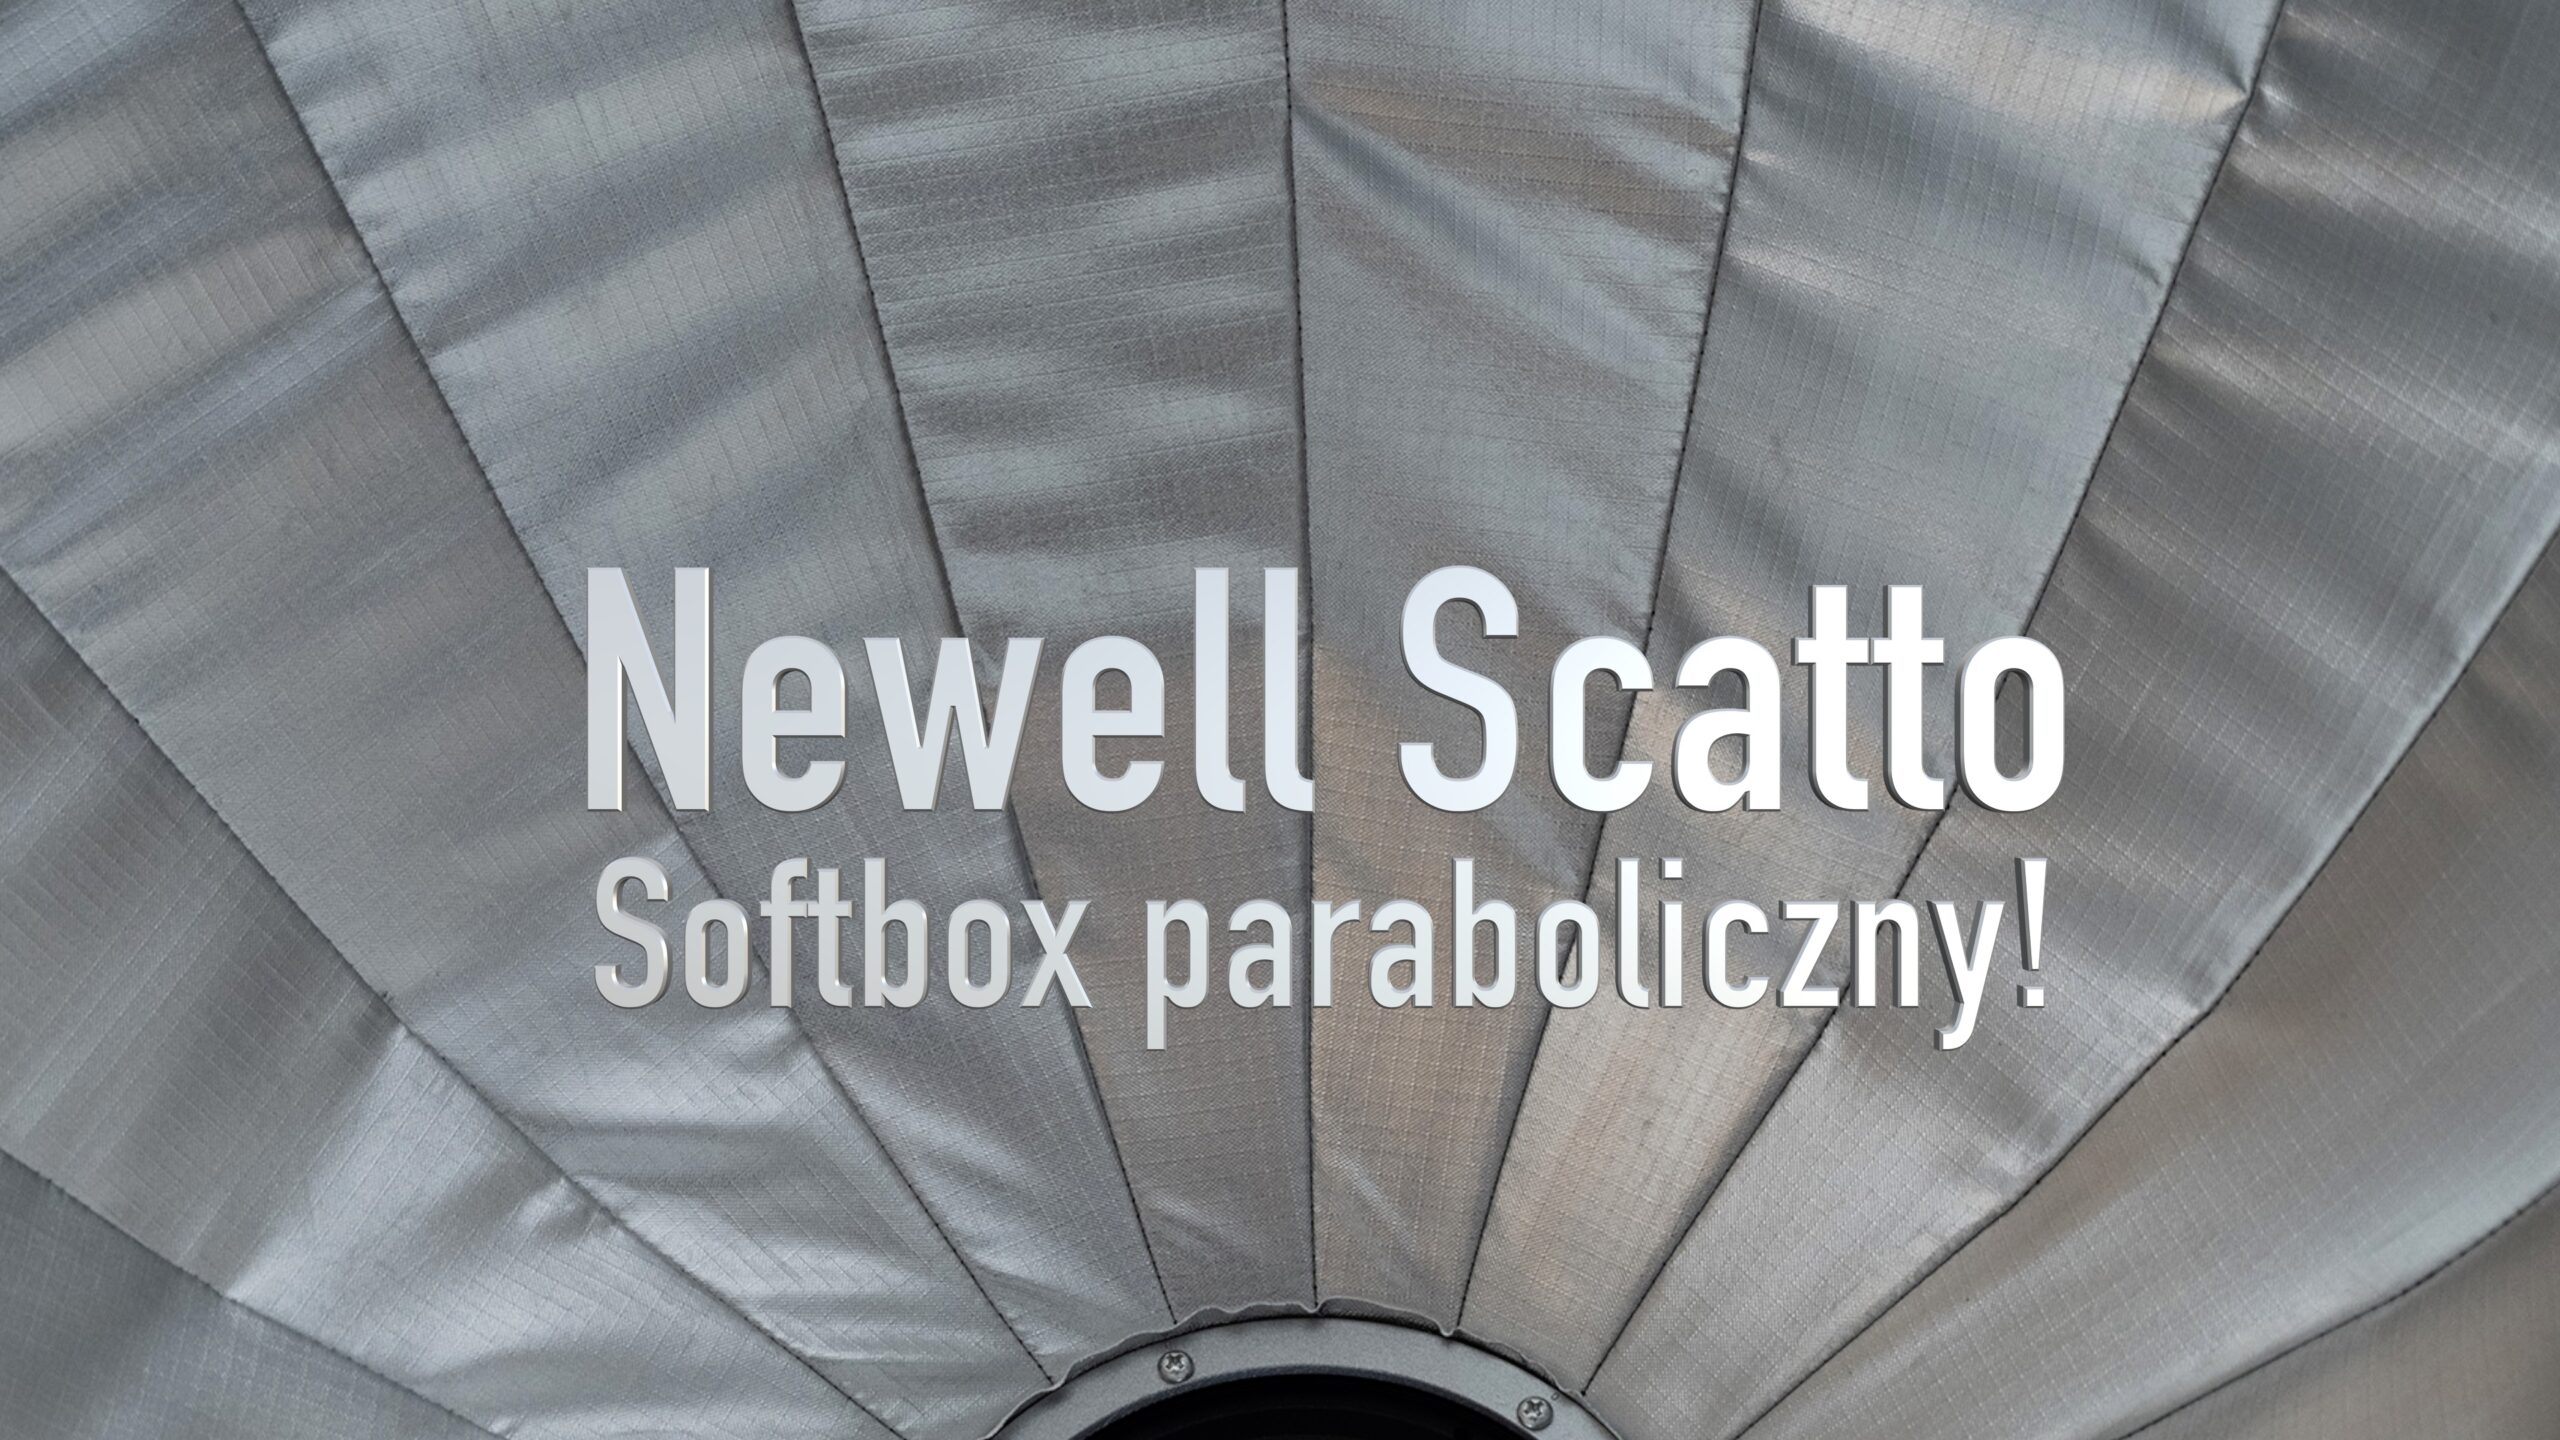 Newell Scatto – Softbox paraboliczny